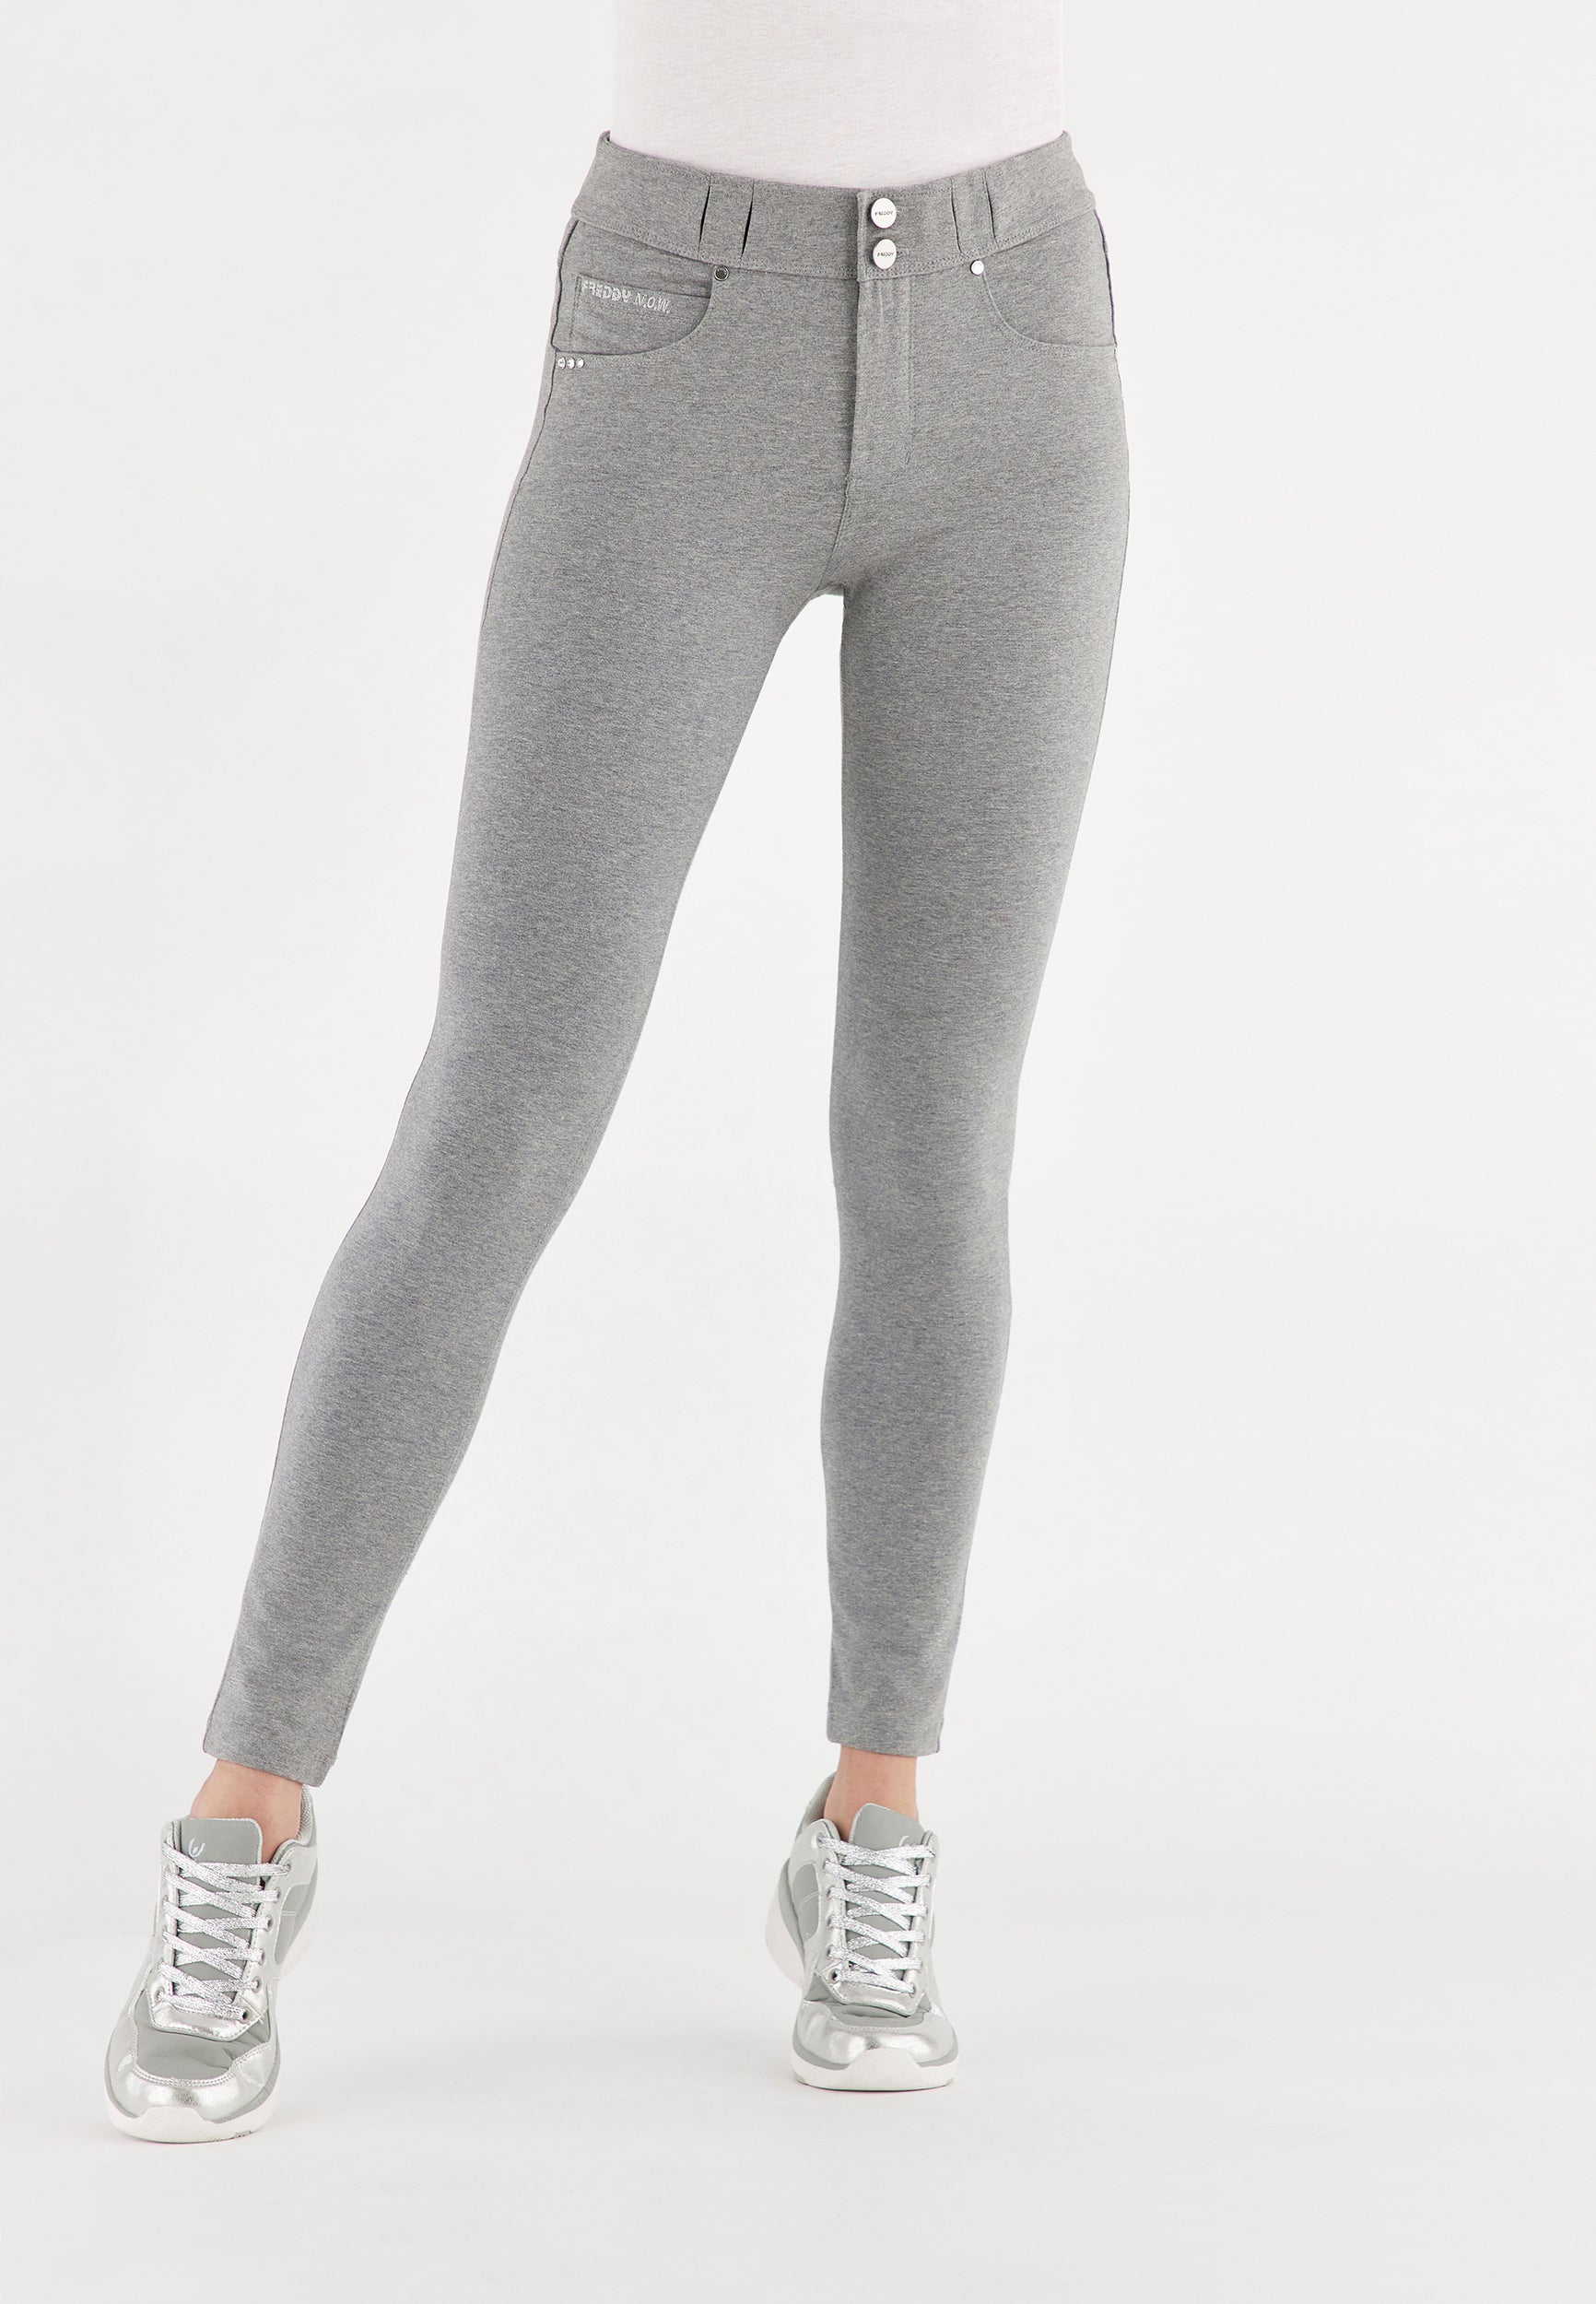 grey grijs grijze broek pants yoga comfortabel stretch legging jegging slim fit  NOW Freddypants